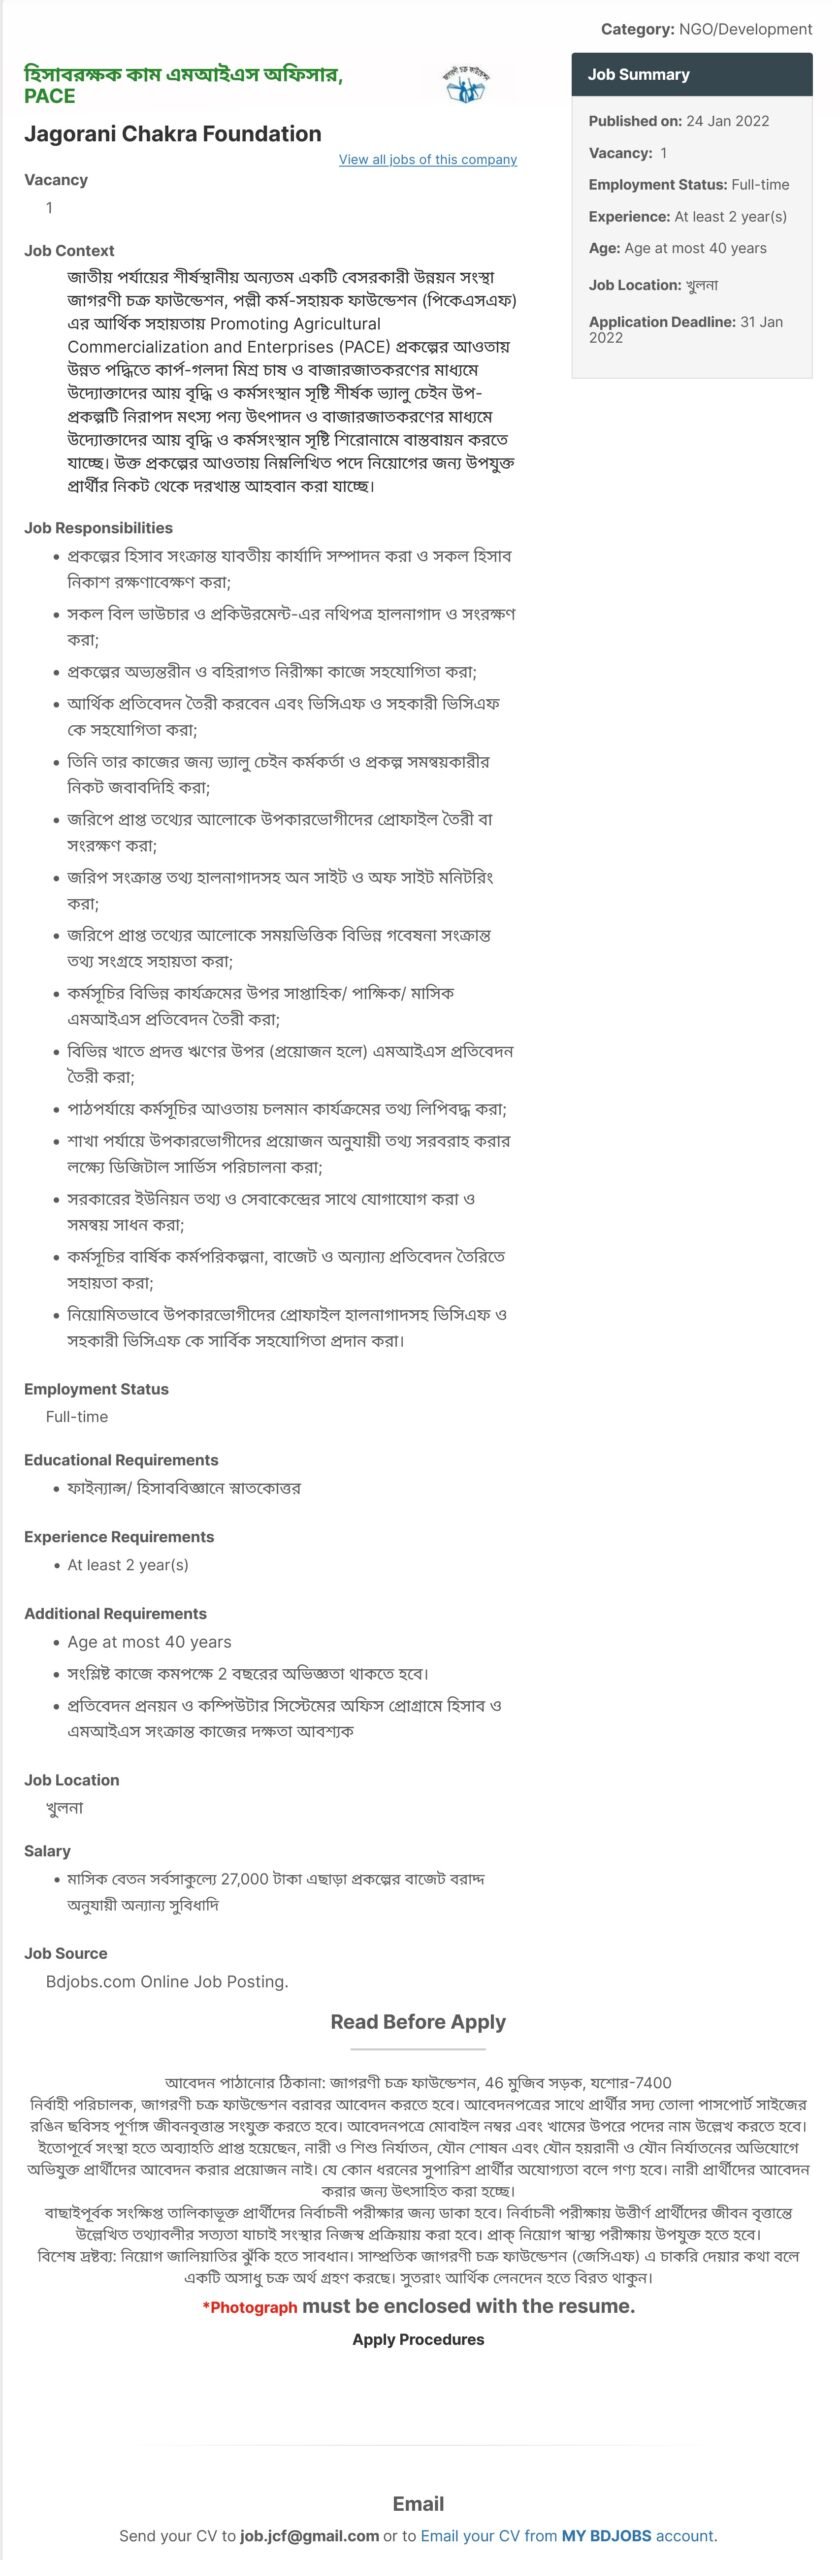 Jagorani Chakra Foundation Job Circular Image & PDF Download